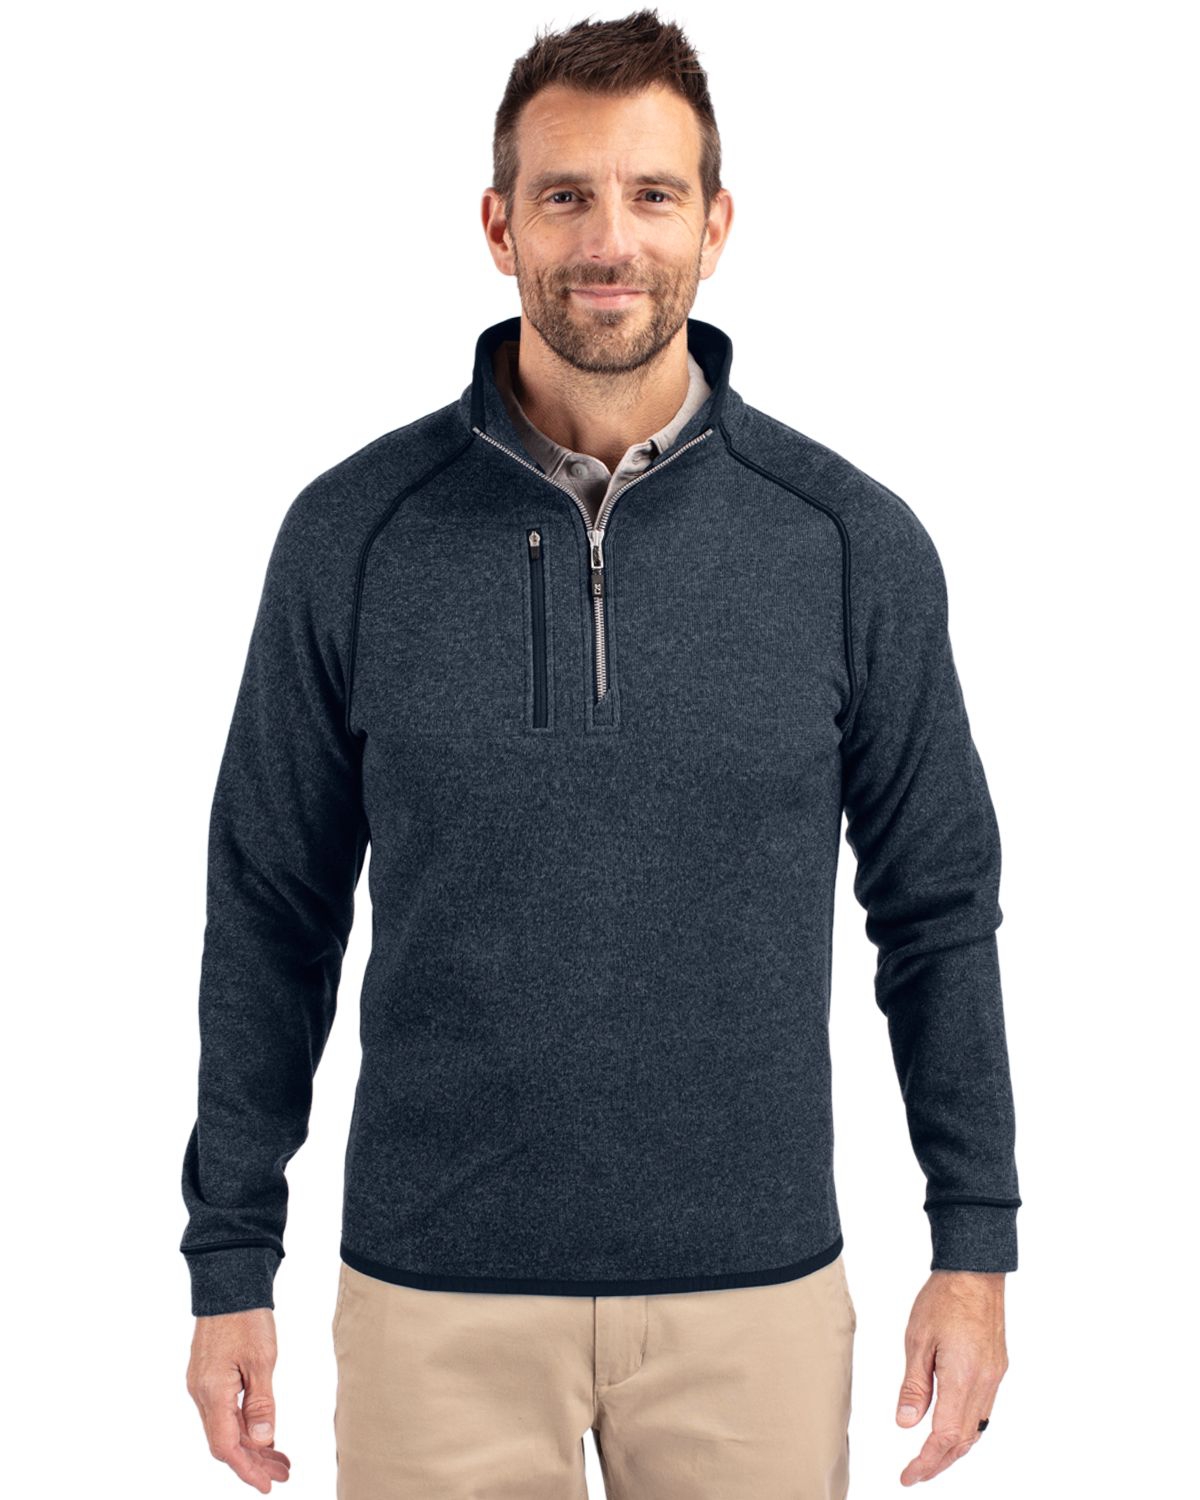 Mainsail Sweater-Knit Mens Big and Tall Half Zip Pullover Jacket - Liberty navy heather